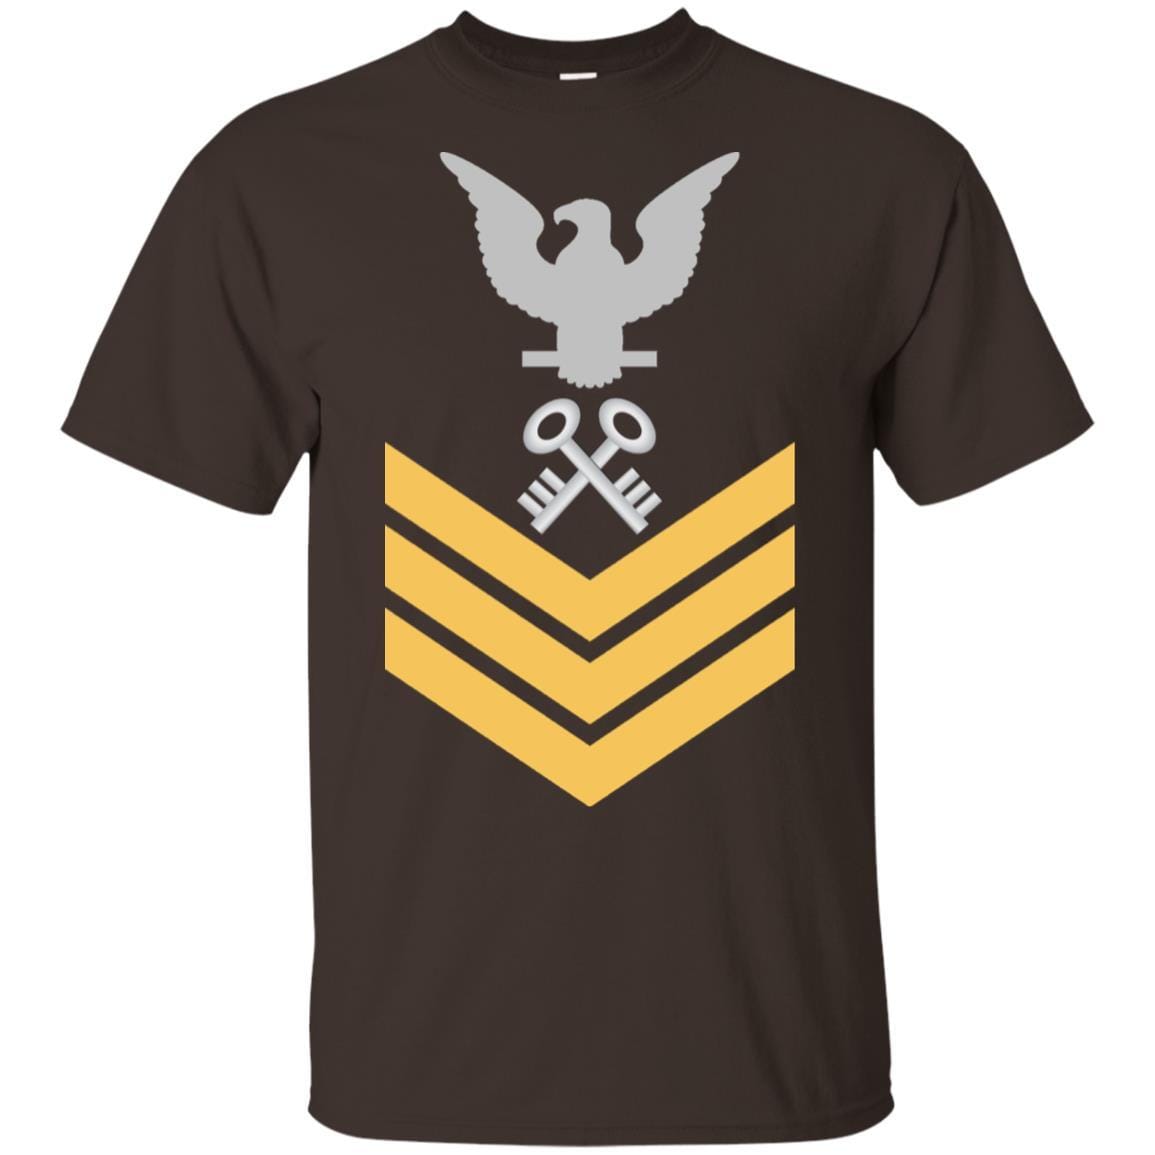 Military T-Shirt "Navy Storekeeper Navy SK E-6 Rating Badges On" Front For Men-TShirt-General-Veterans Nation